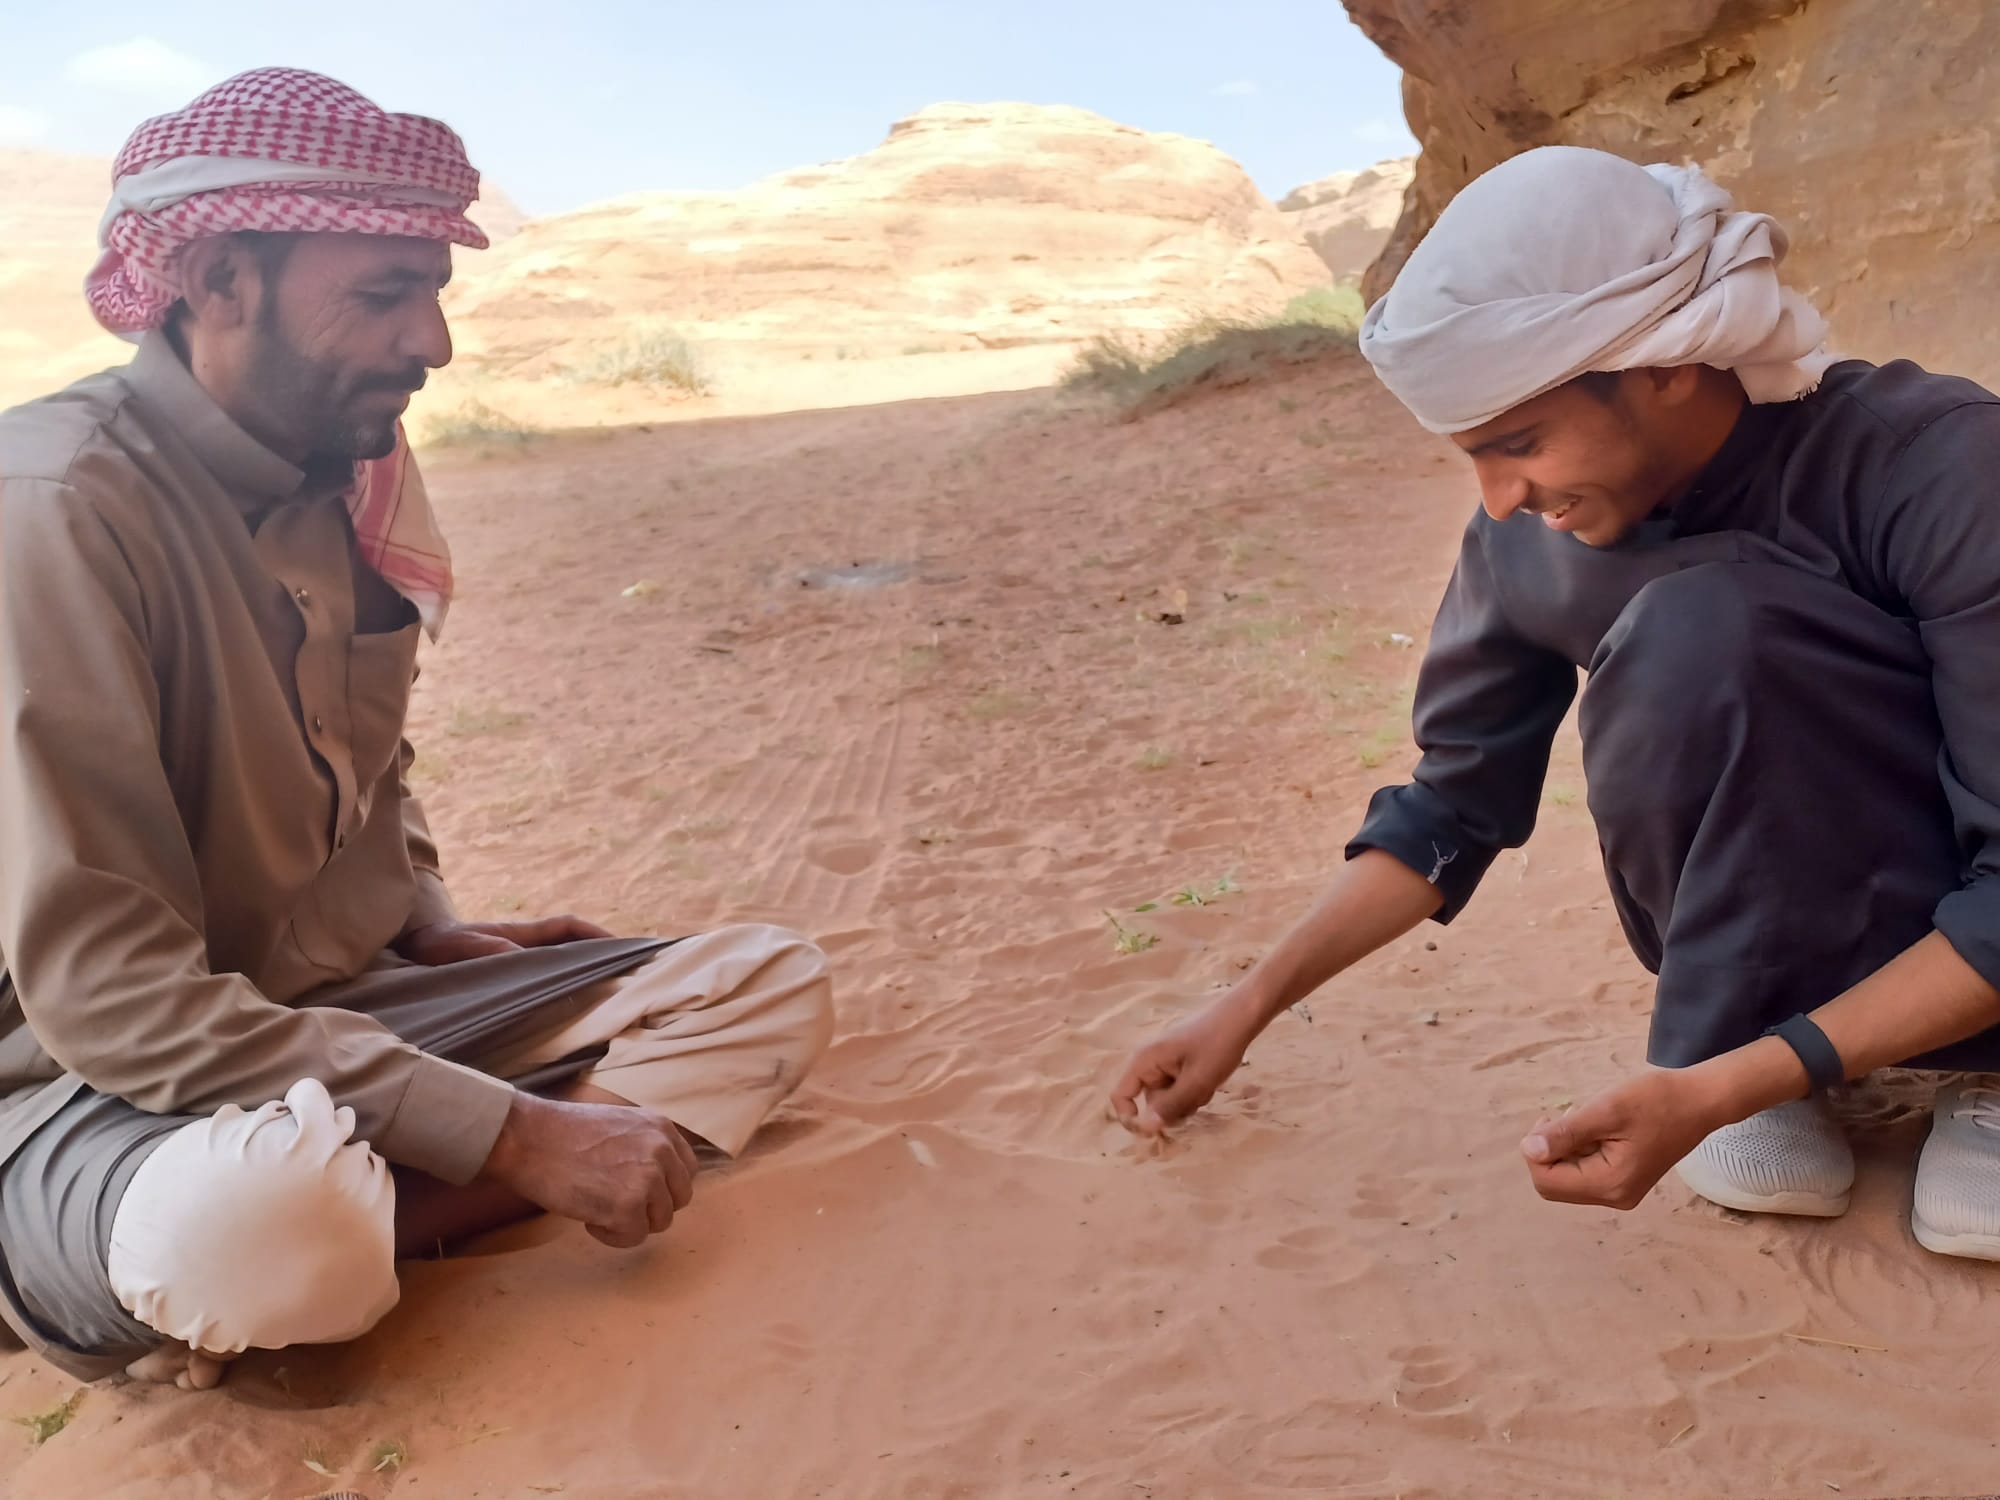 Emotion-Planet-voyage-jordanie-bivouac-desert-bedouins-population-local